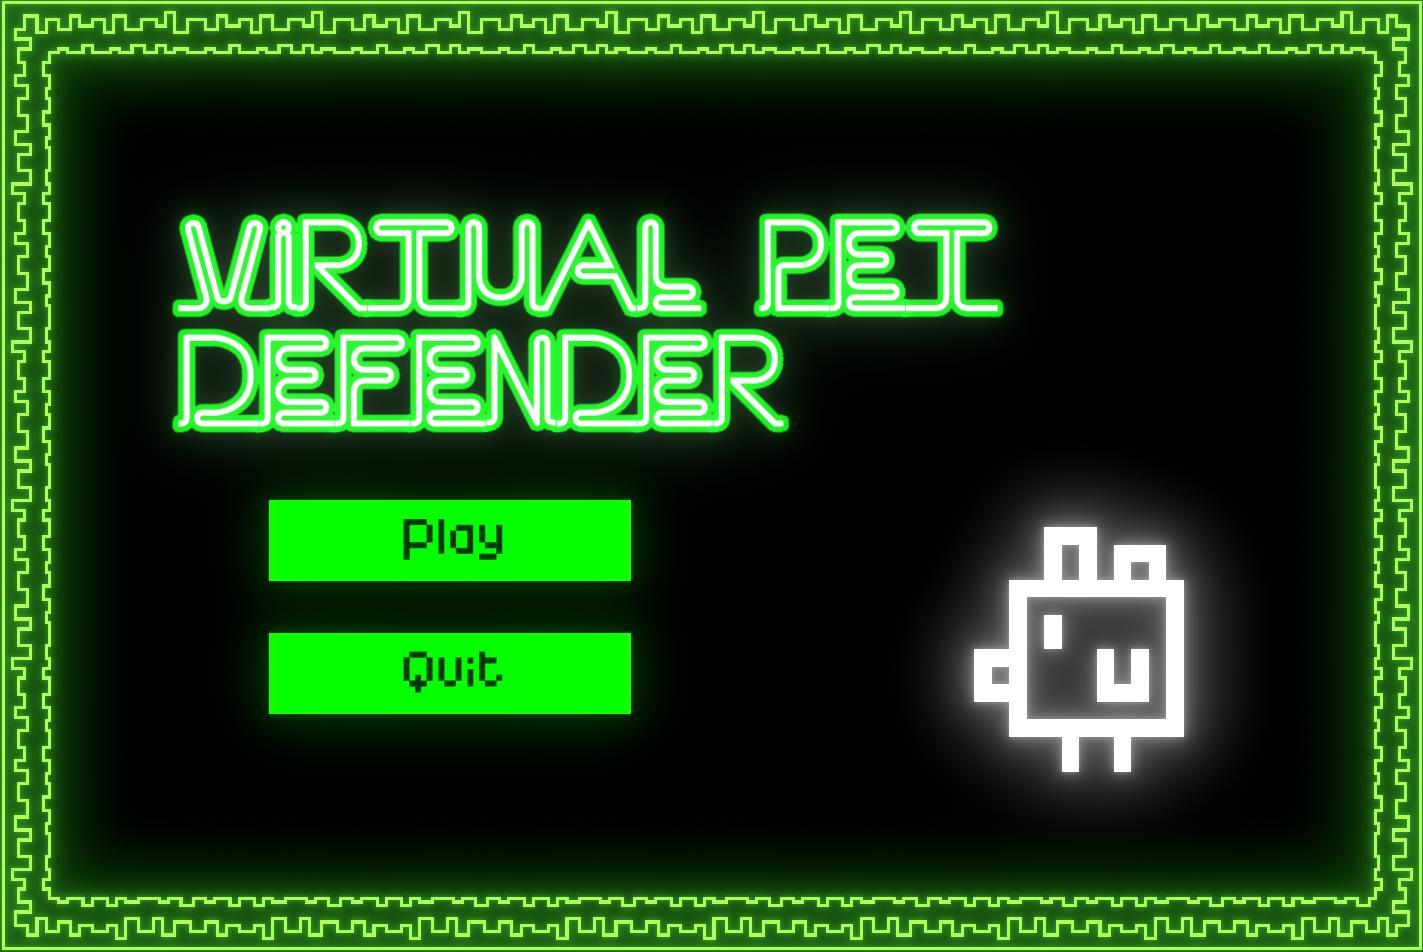 Virtual pet что это. Virtual Pet ASUS. Virtual Pet. Виртуал пет асус что это.